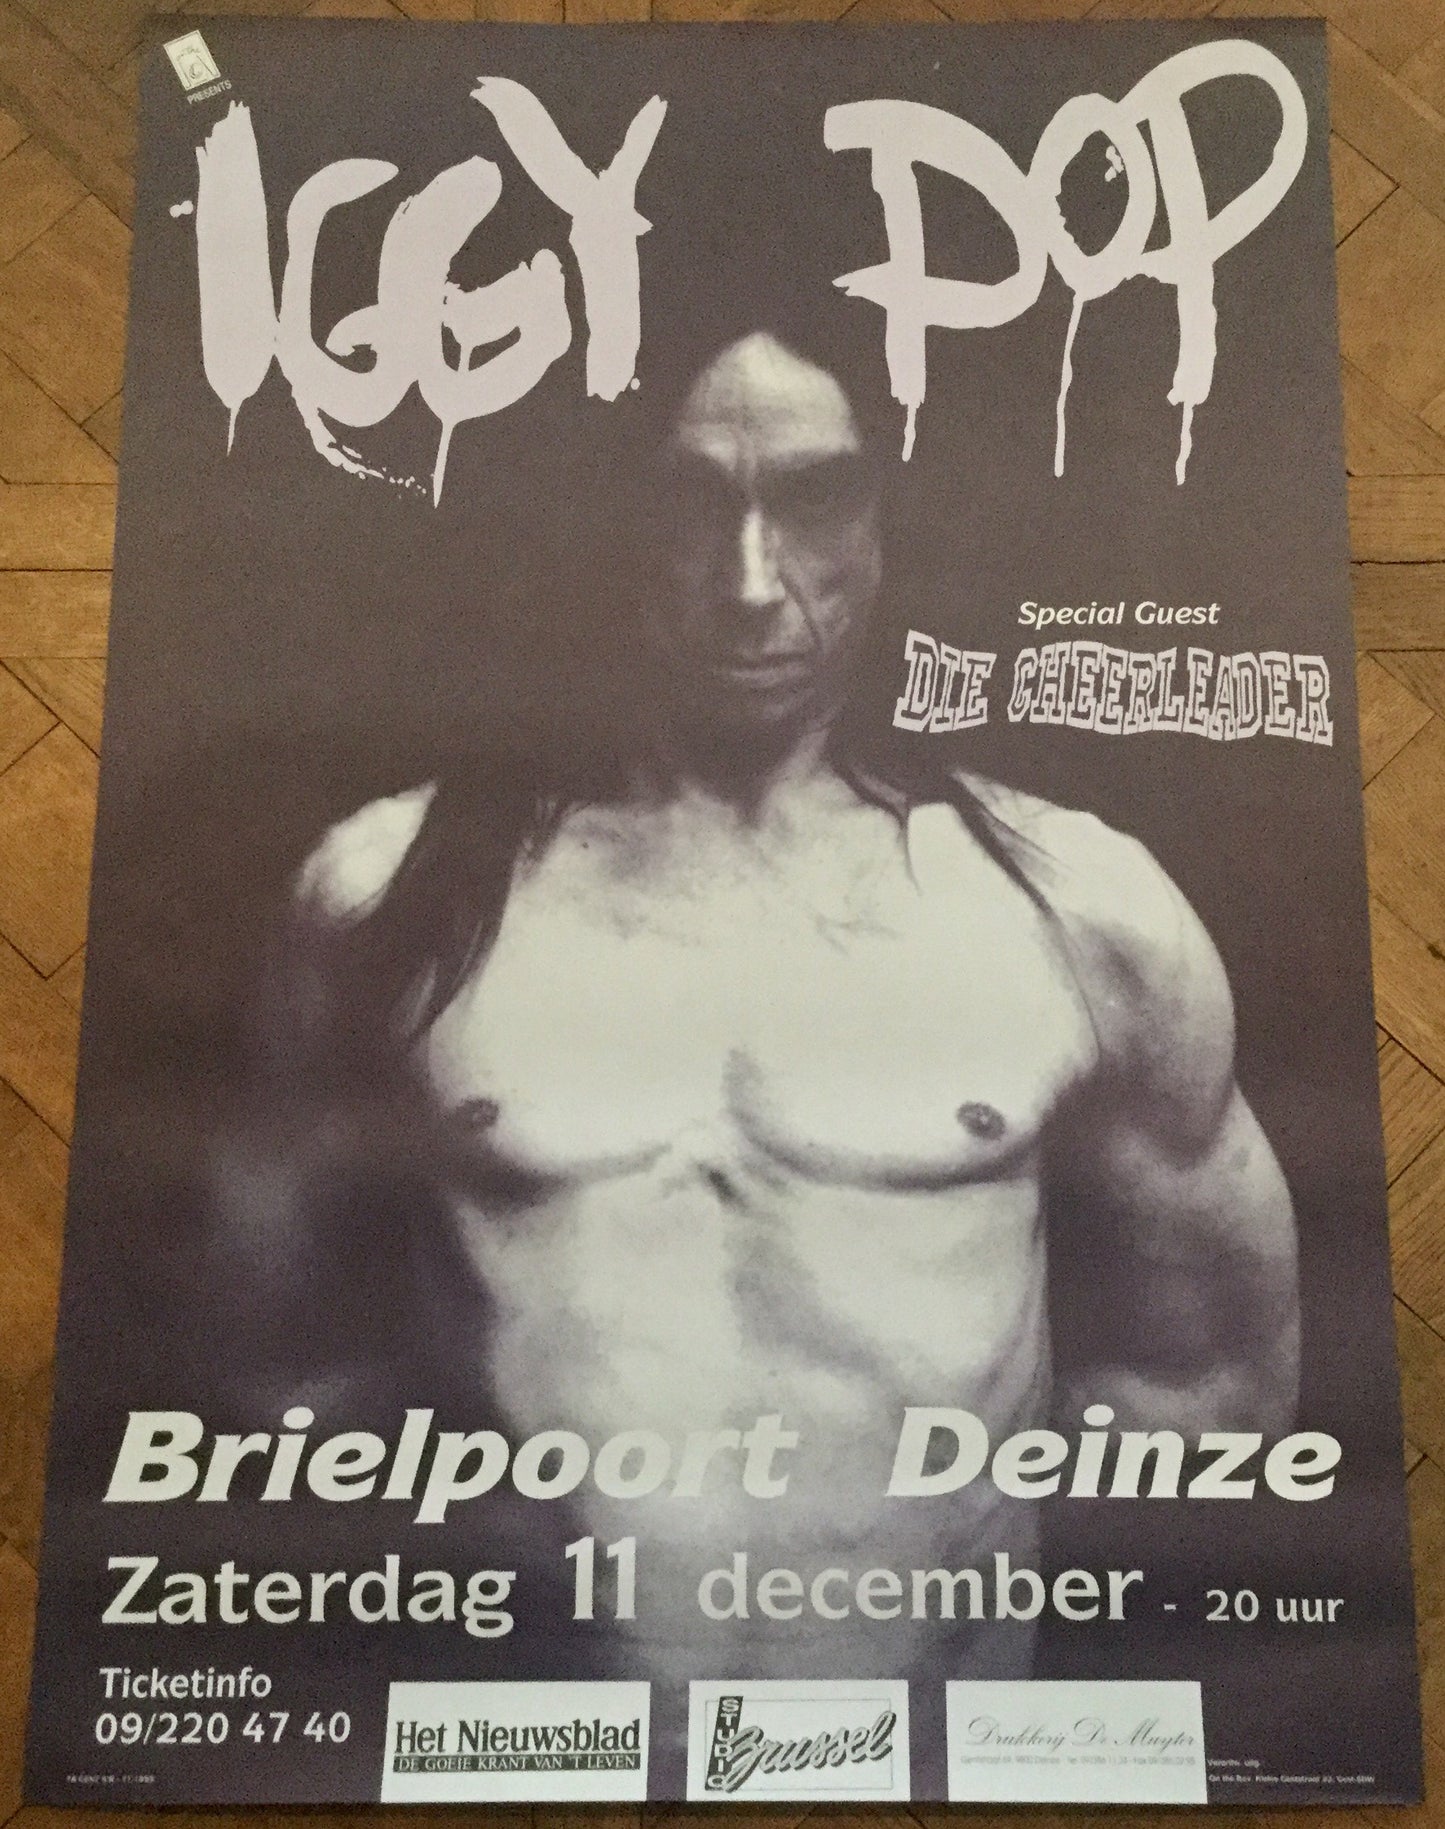 Iggy Pop Original Concert Tour Gig Poster Brielpoort Deinze 11th Dec 1993